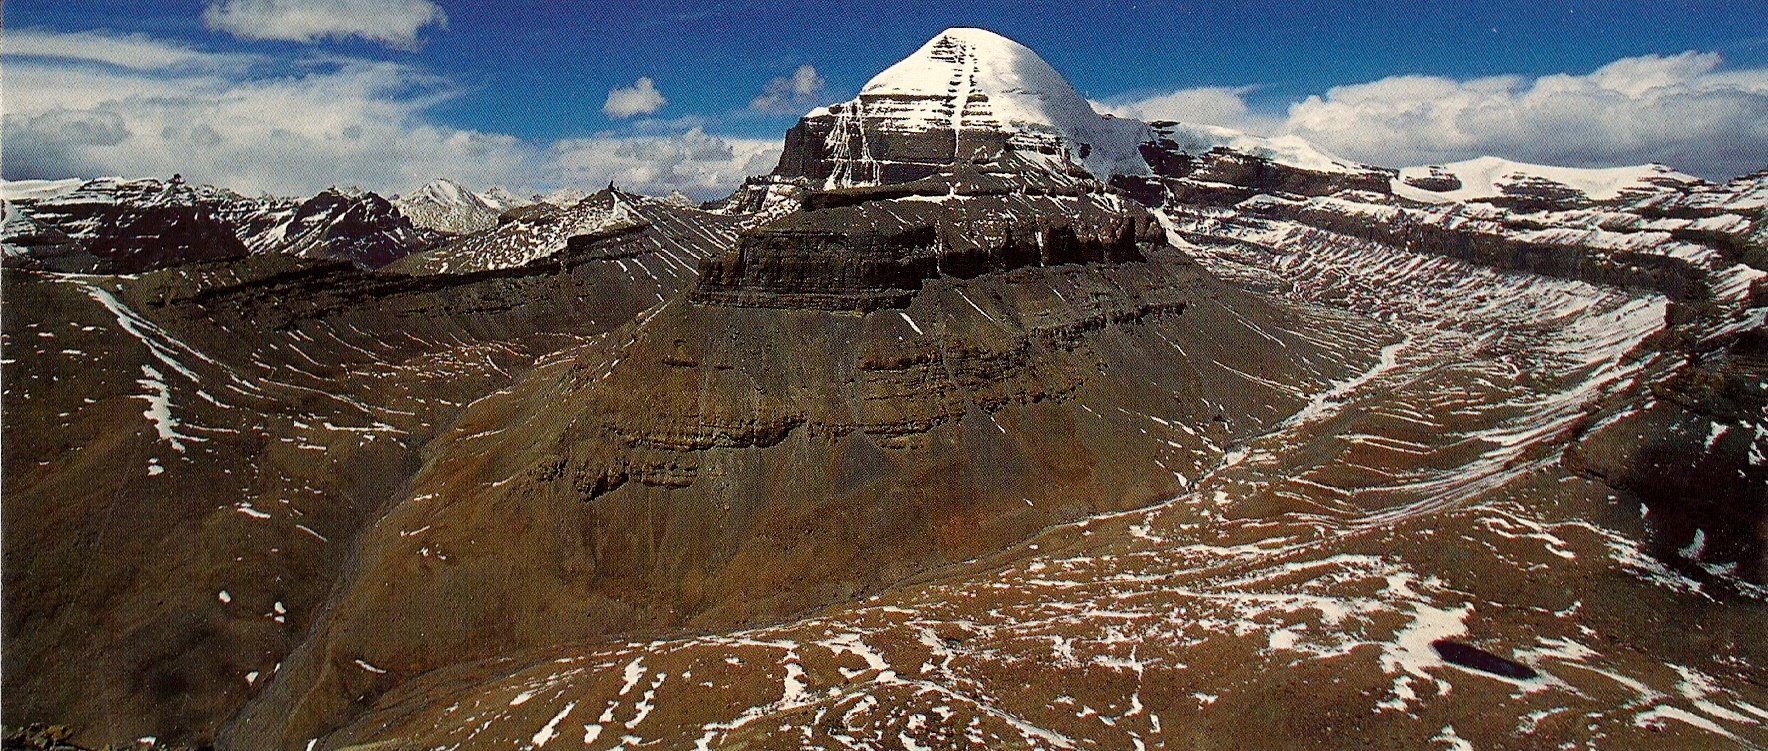 Mount Kailash Mansarovar Photos | Kailash Journeys Pvt. Ltd.